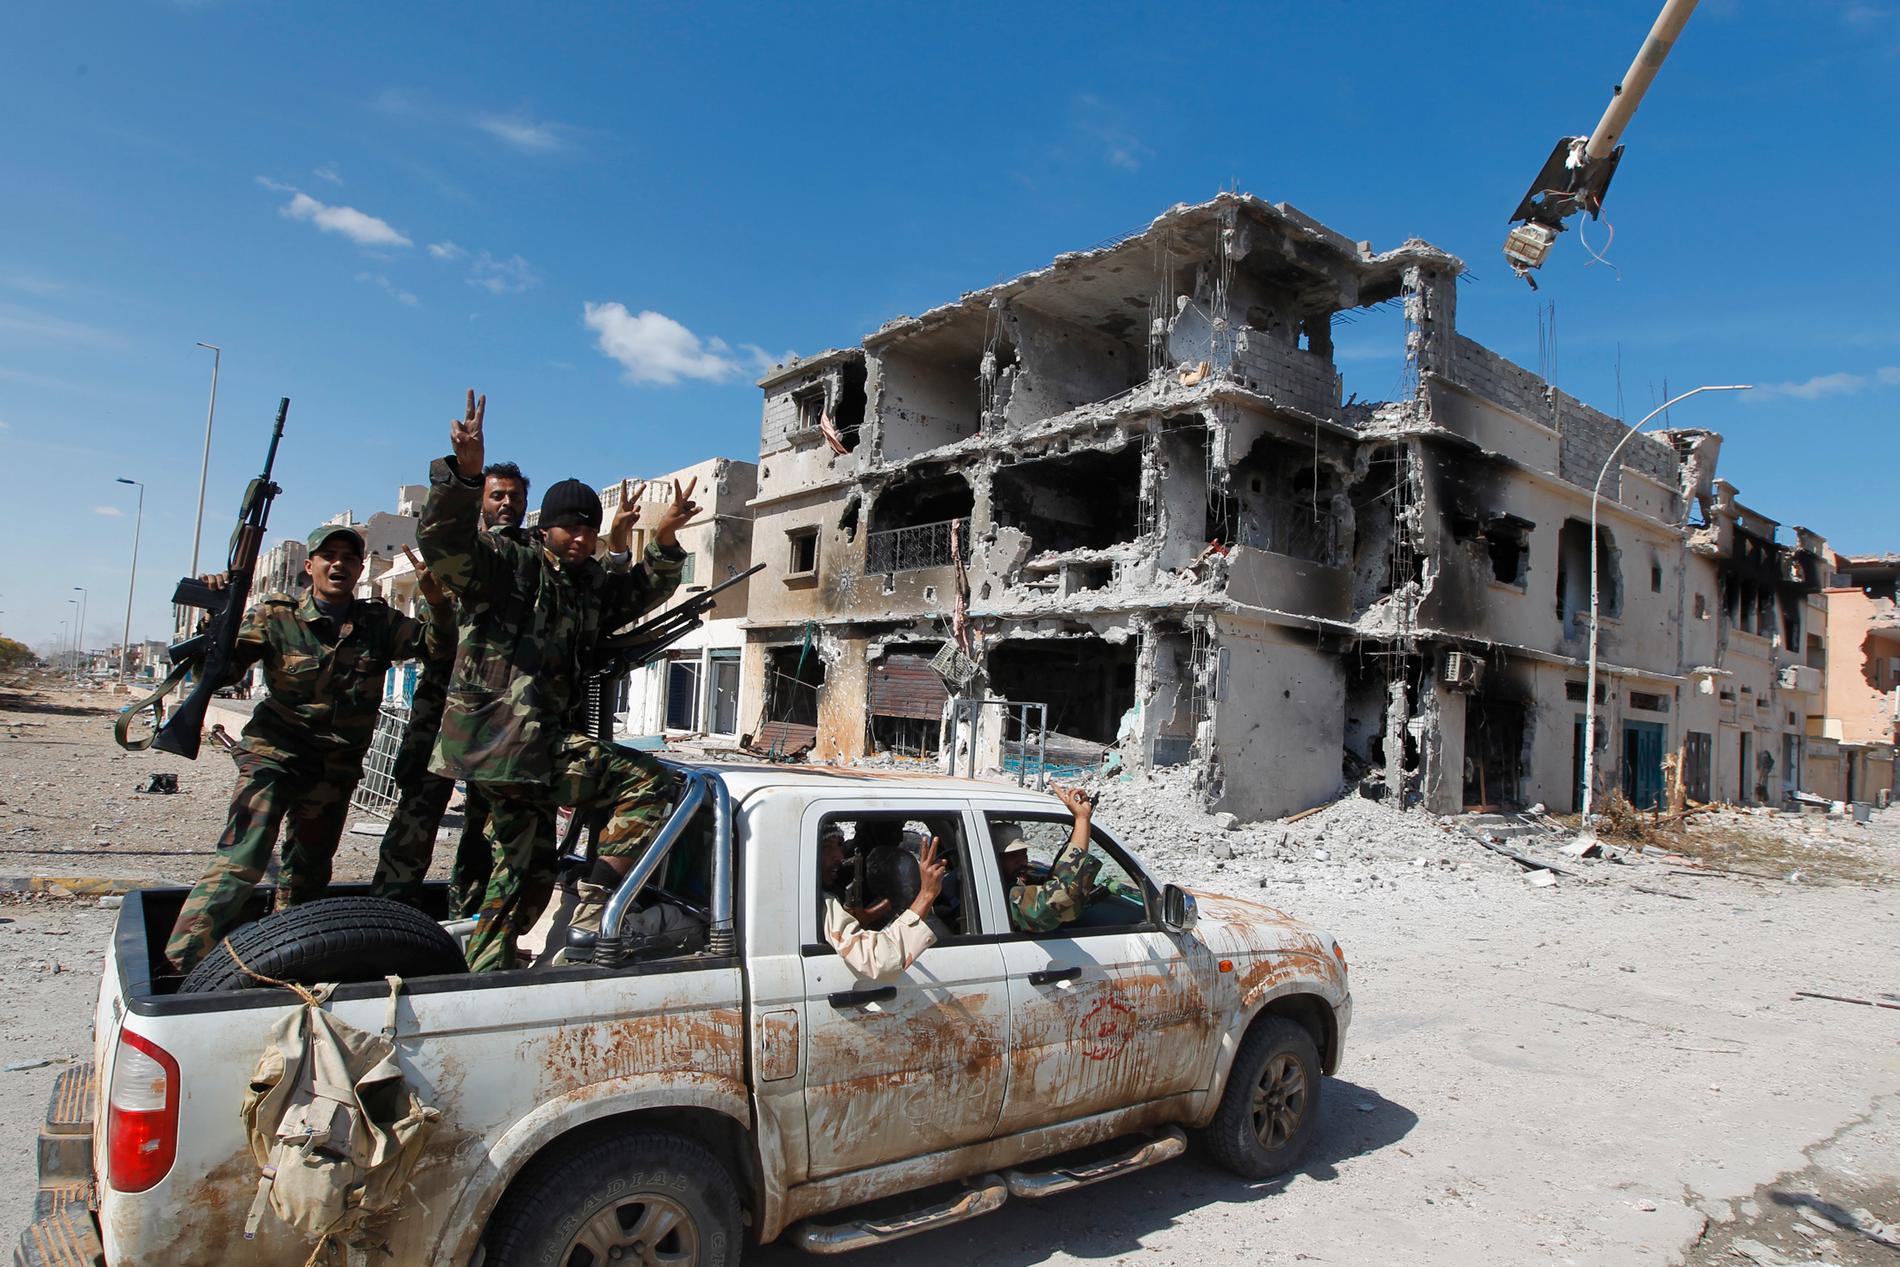 Glädjescener när anti-Gaddafistyrkor intog Sirte, Gaddafis hemstad.